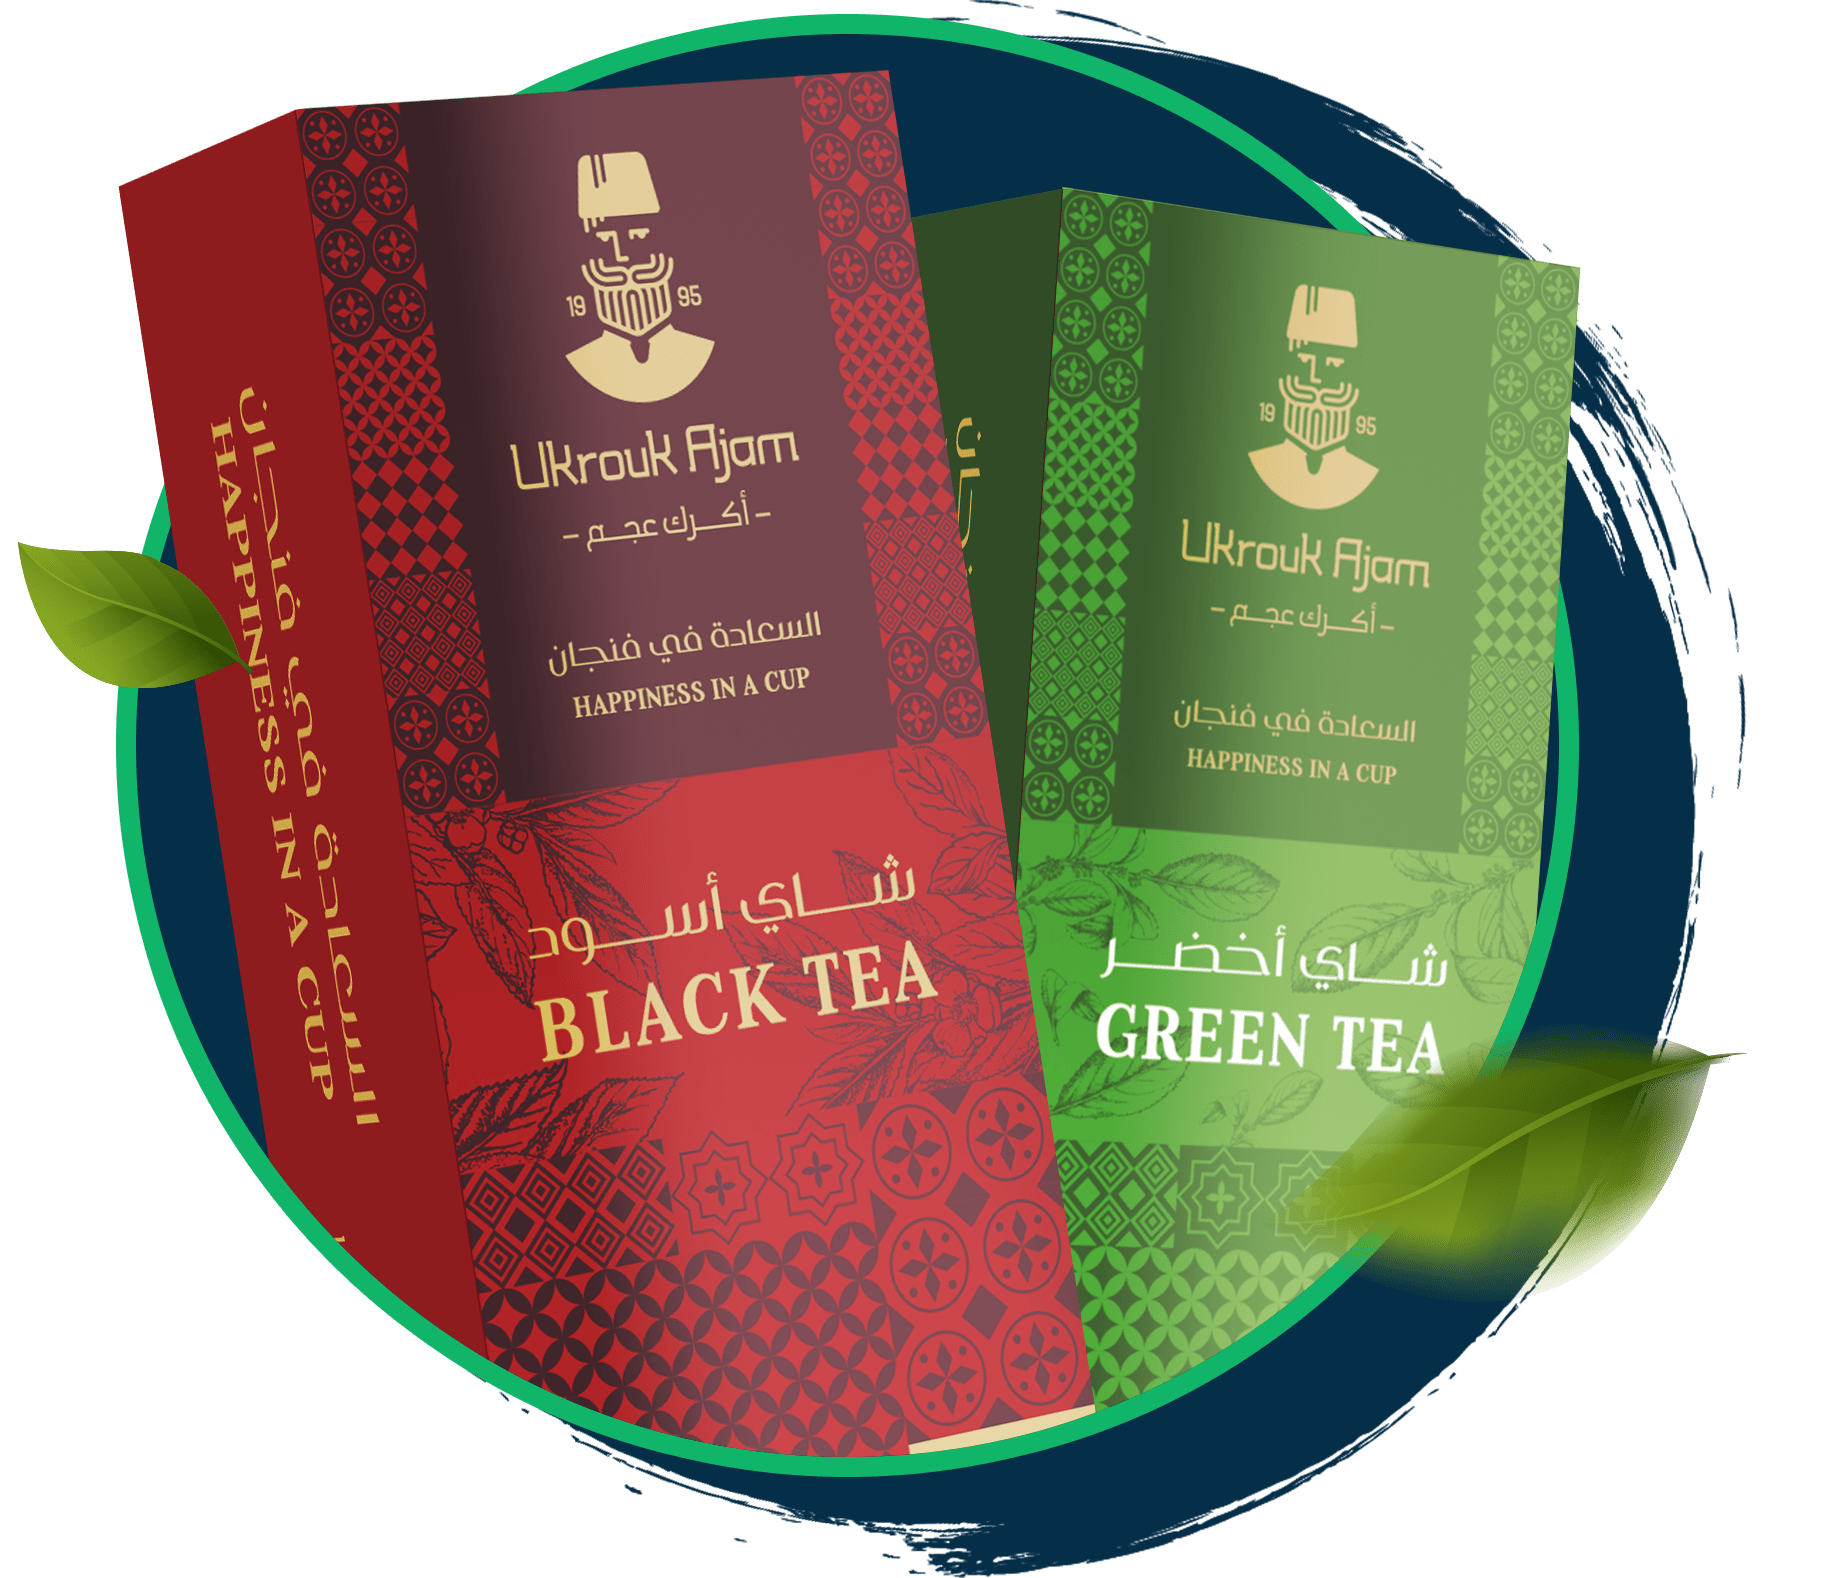 Ukrouk Ajam Tea Package (keywords: Ukrouk Ajam, tea, yhsmart.co)